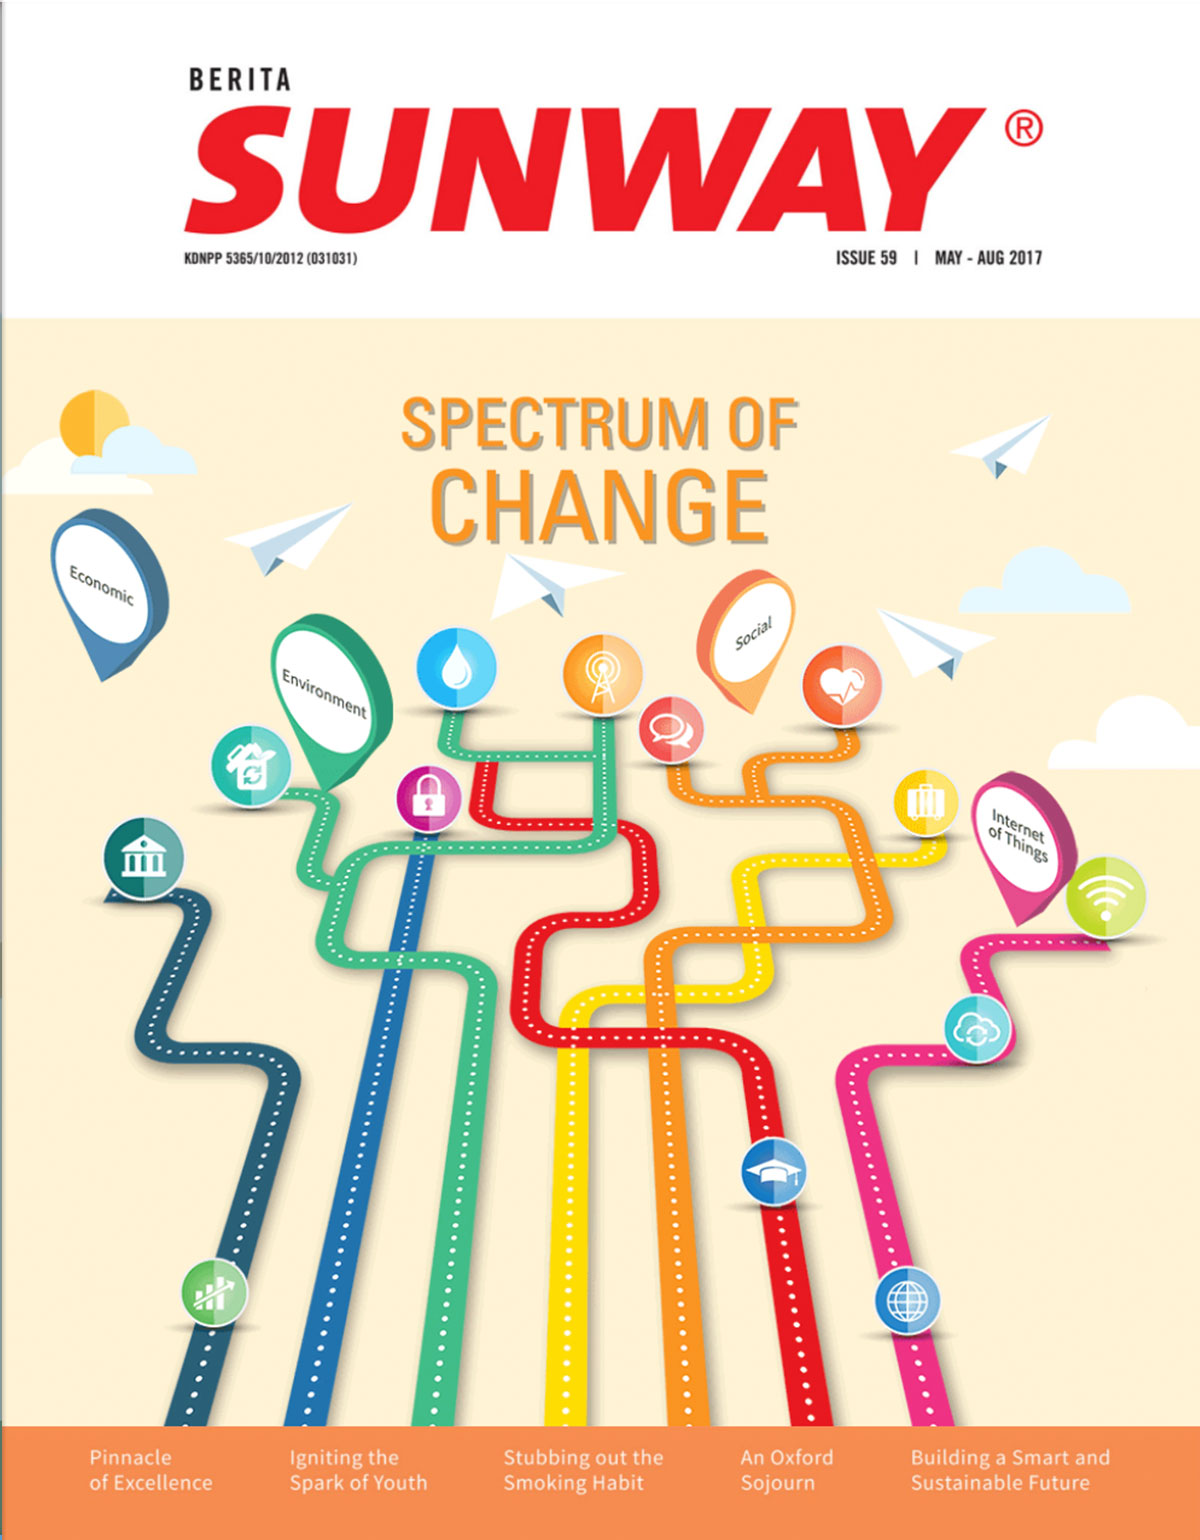 Berita Sunway Issue 59